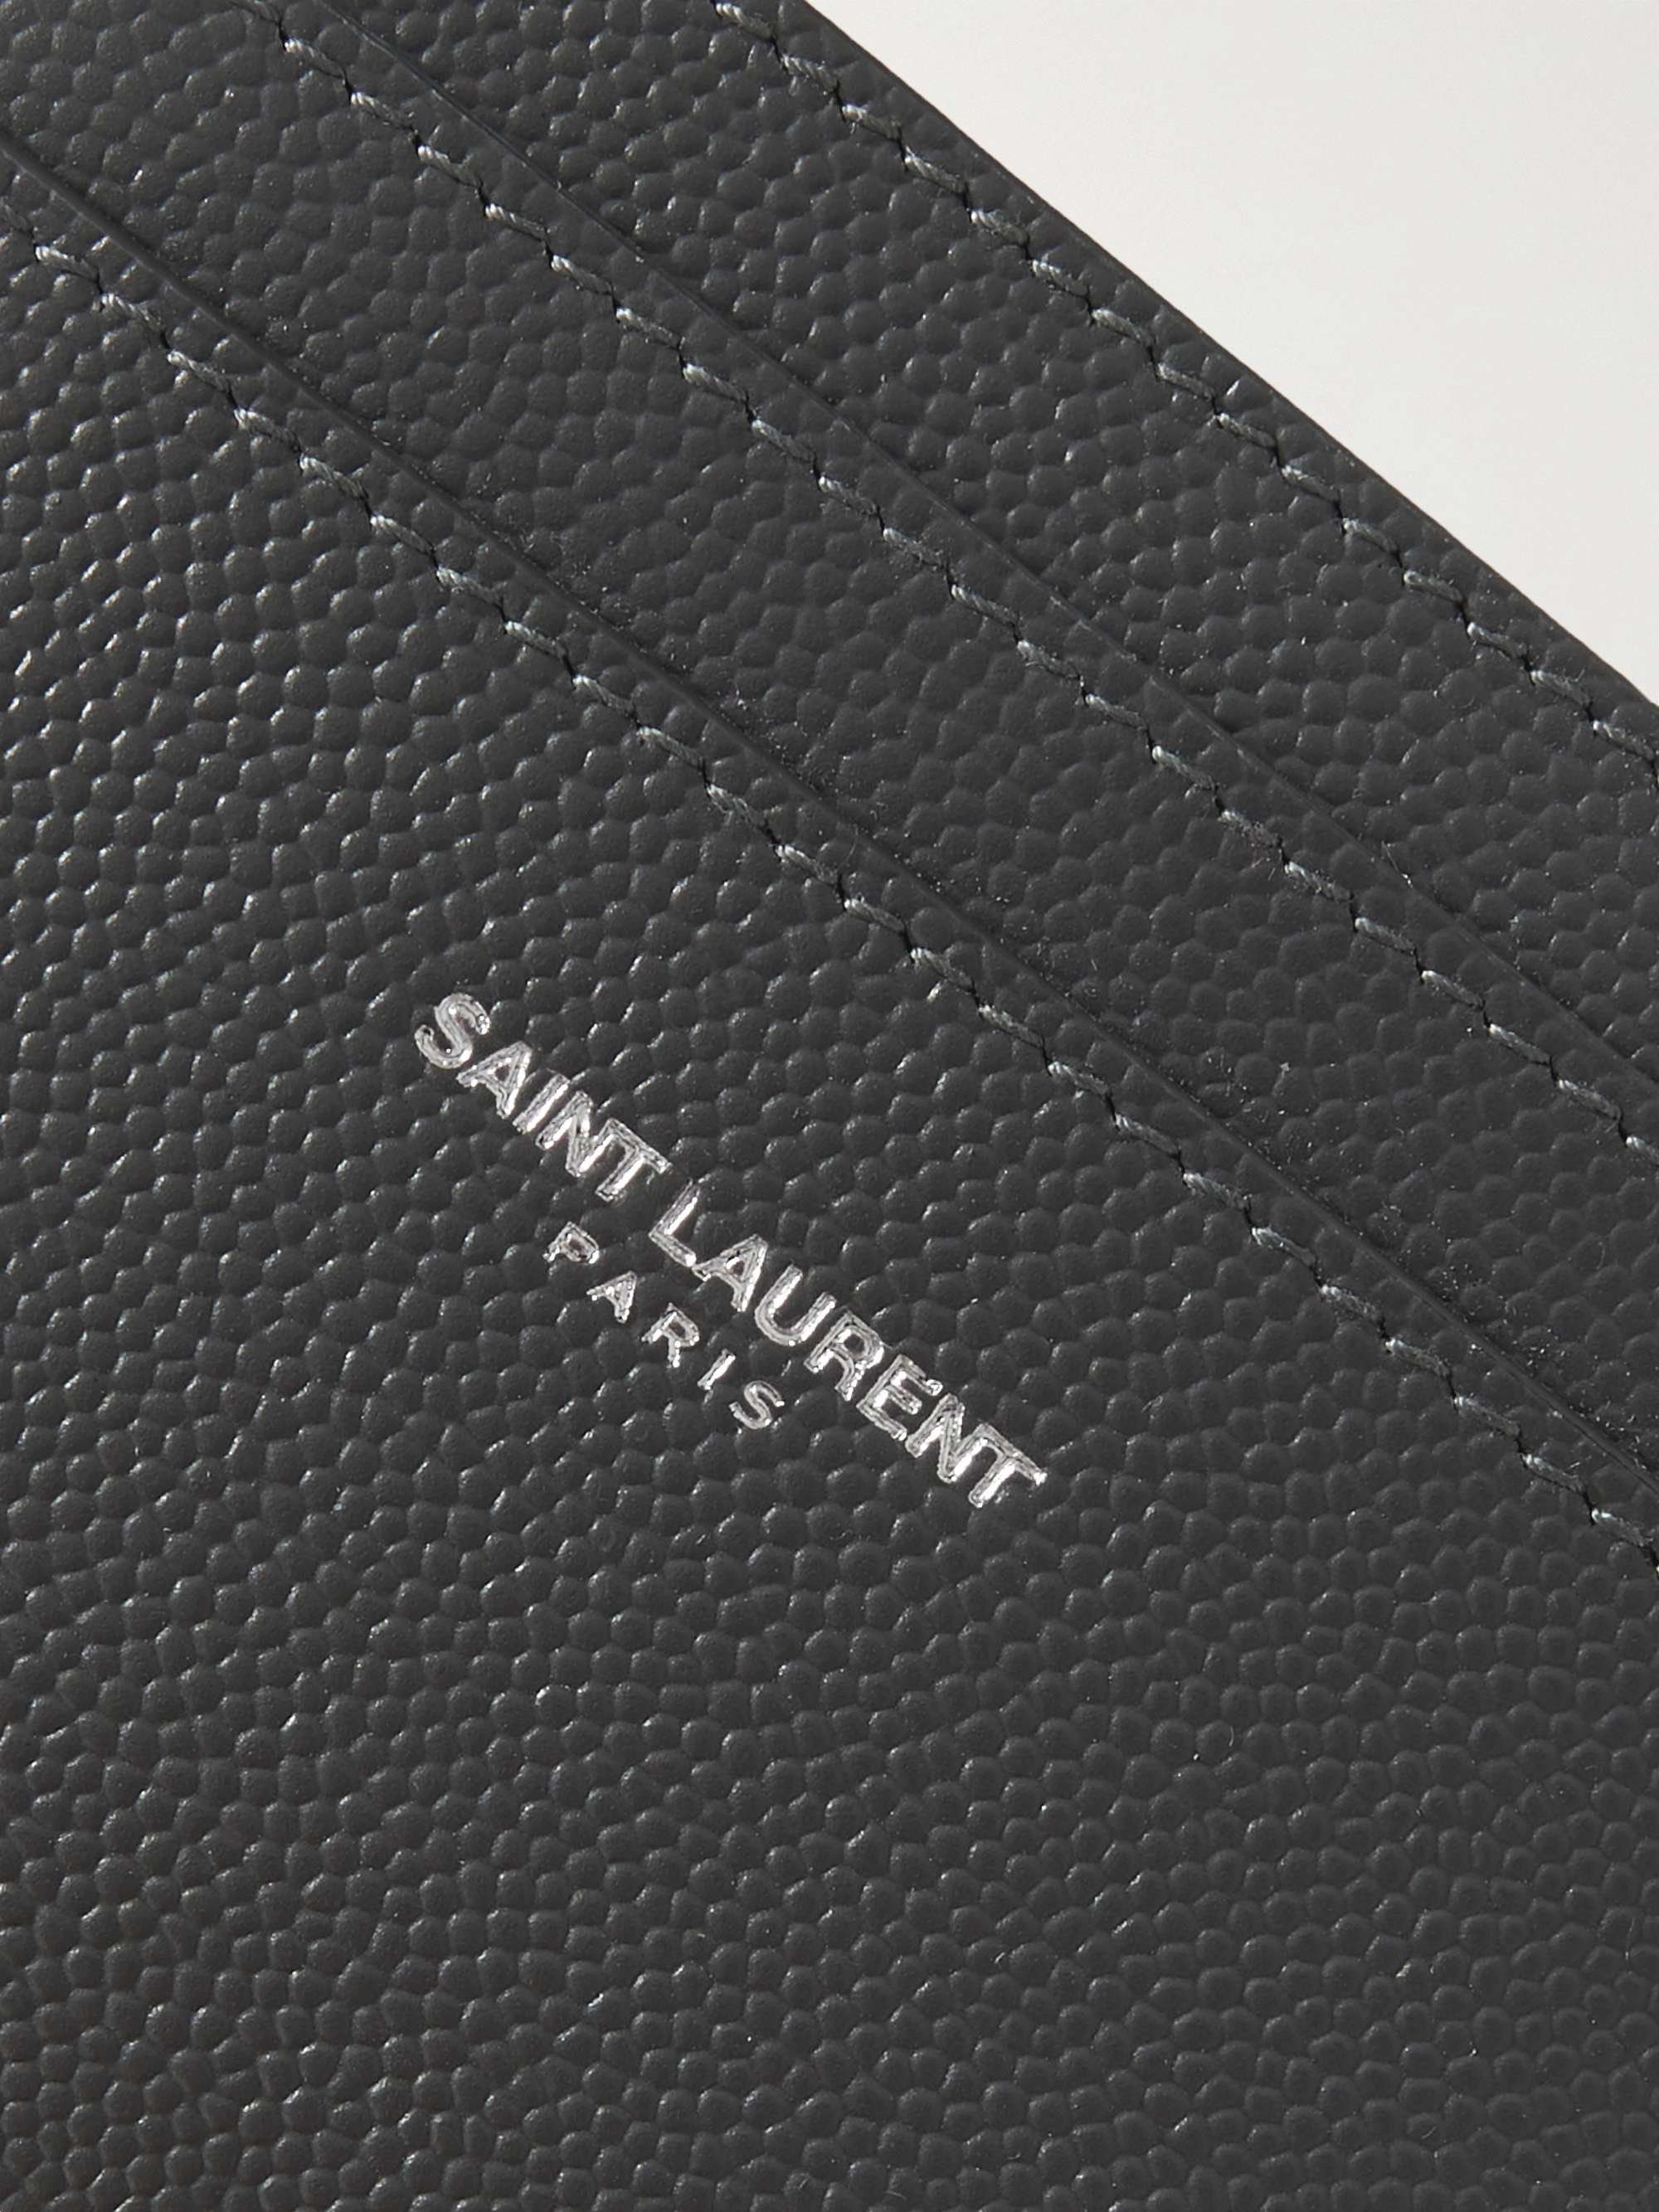 SAINT LAURENT Logo-Print Pebble-Grain Leather Cardholder